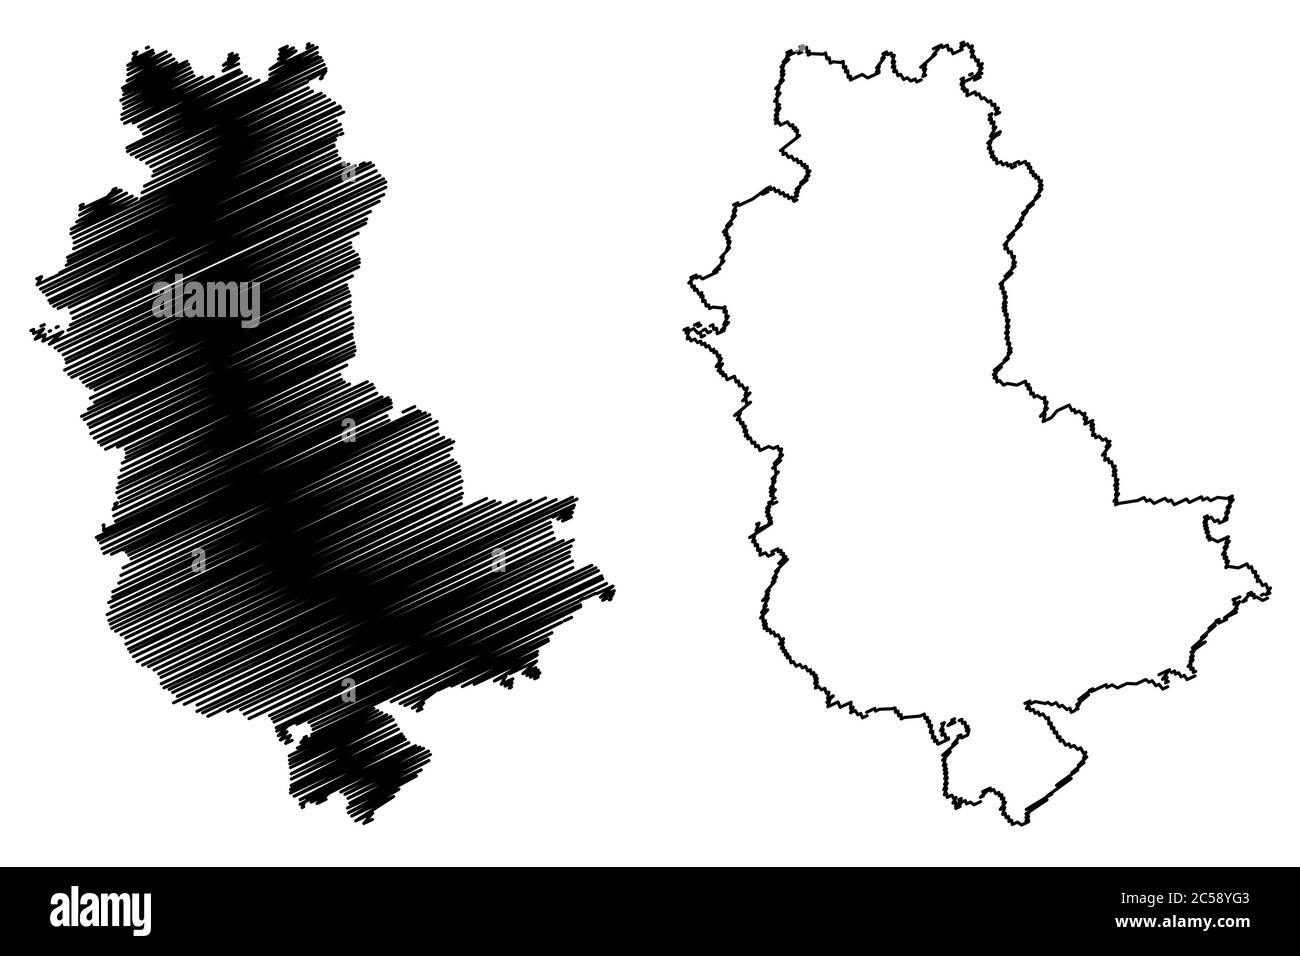 Departamento Rhone (Frankreich, Frankreich, Republik Frankreich, Region Auvergne-Rhone-Alpes, ARA) Karte Vektorgrafik, Skizze Rhone Karte Stock Vektor